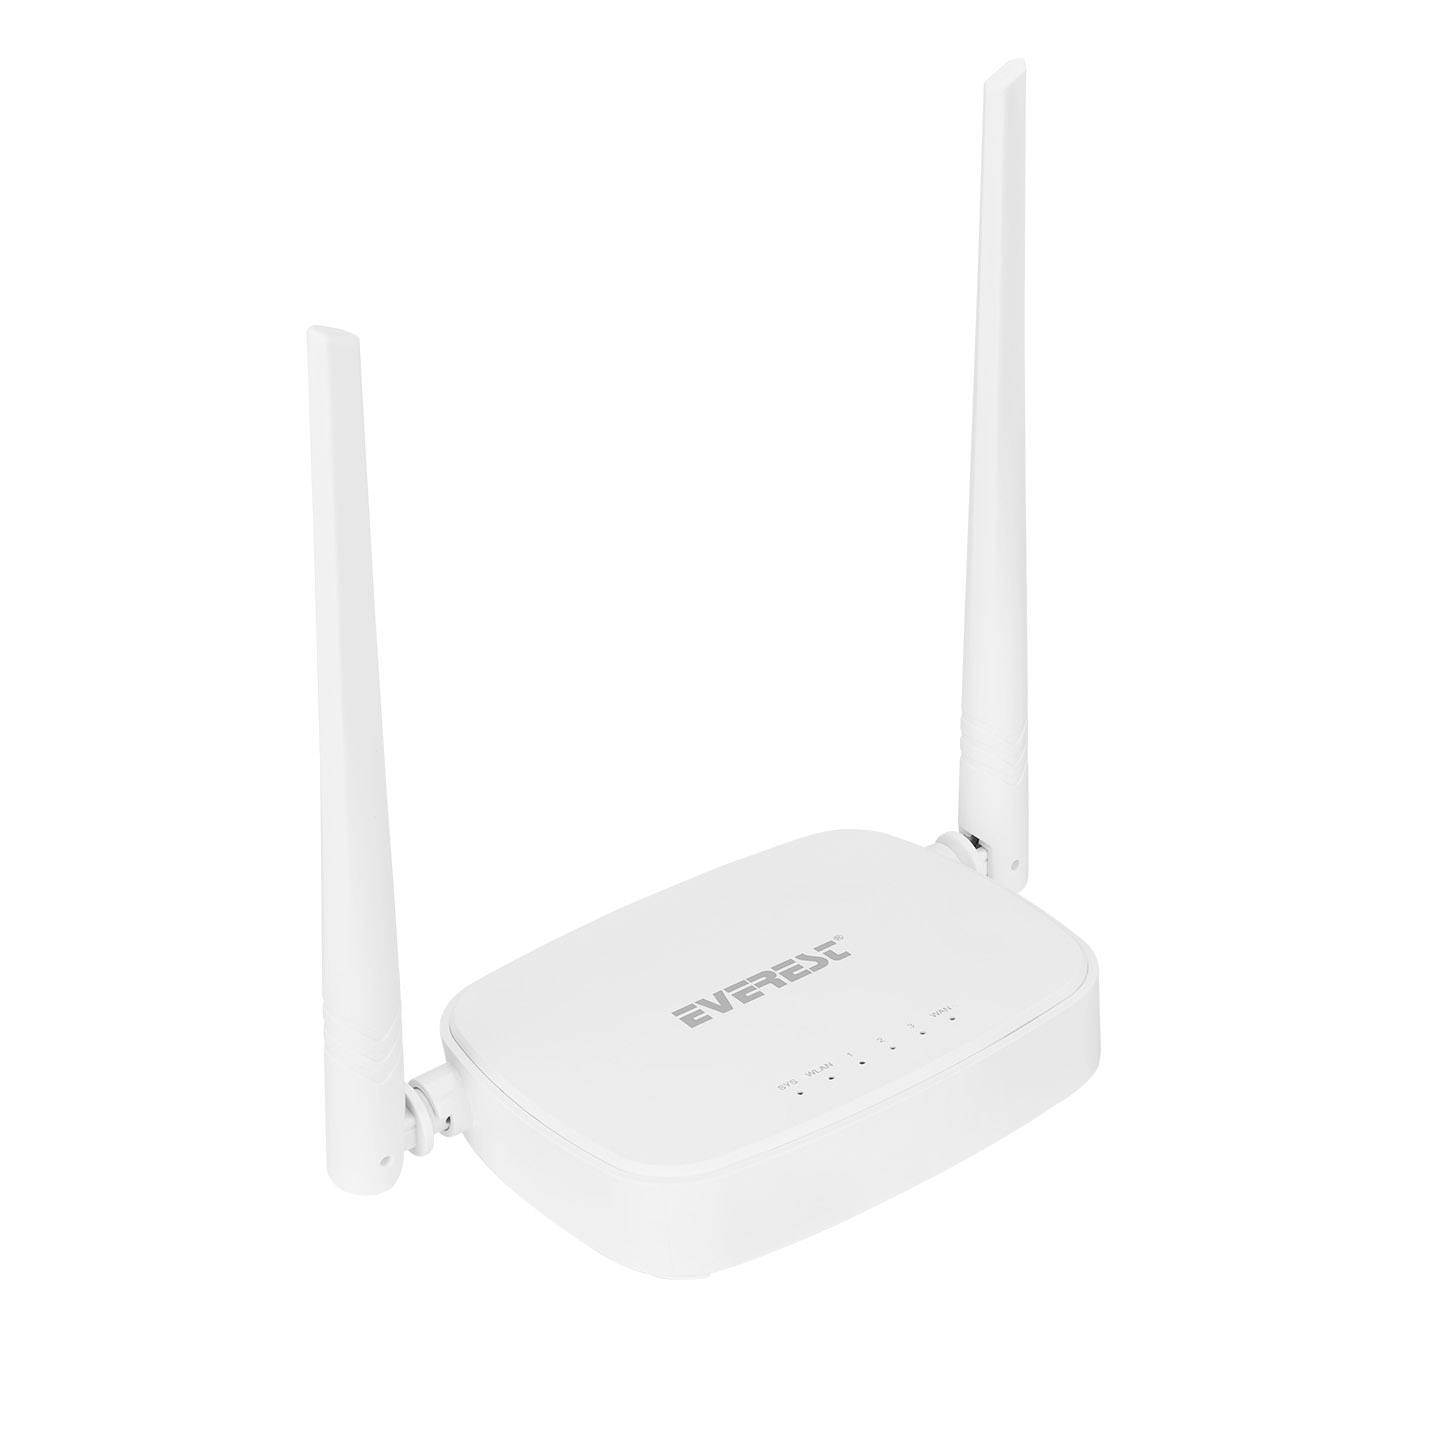 Everest EWR-301 Wireless-N WPS + WISP + WDS 300Mbps Repeater + Access Point + Bridge Wireless Router